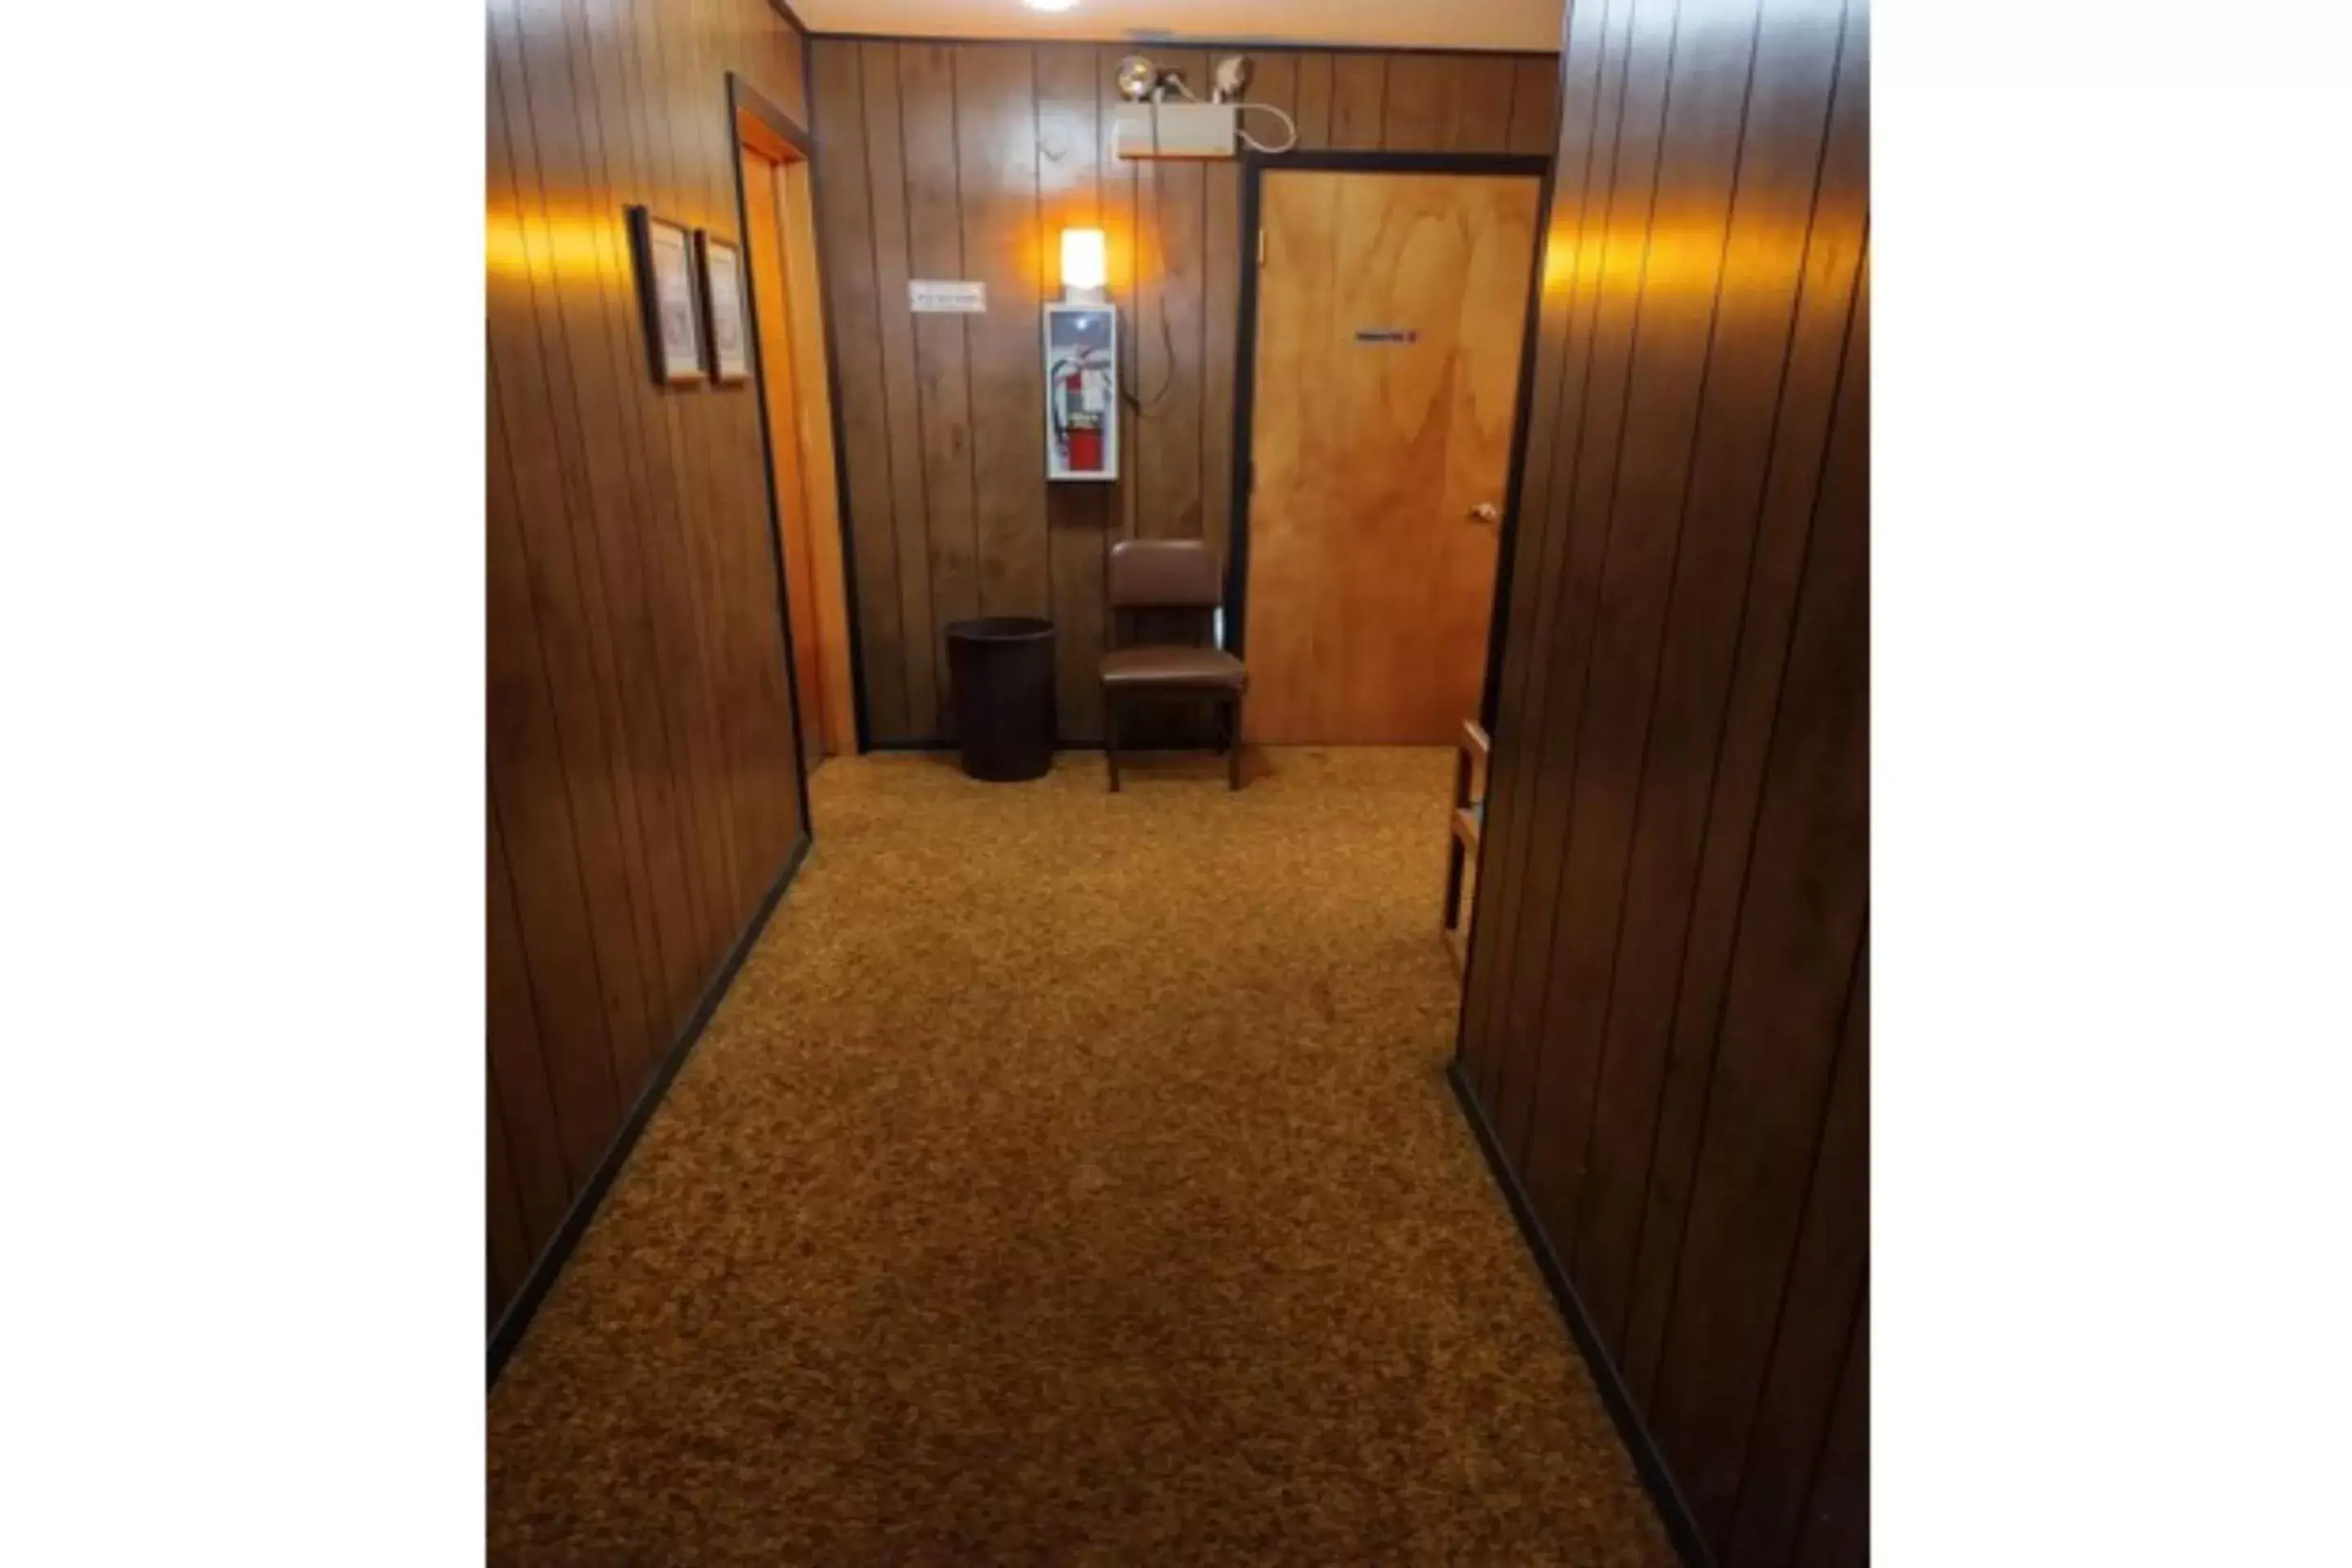 Lobby or reception, Bathroom in Love Hotels Voyageur by OYO at International Falls MN